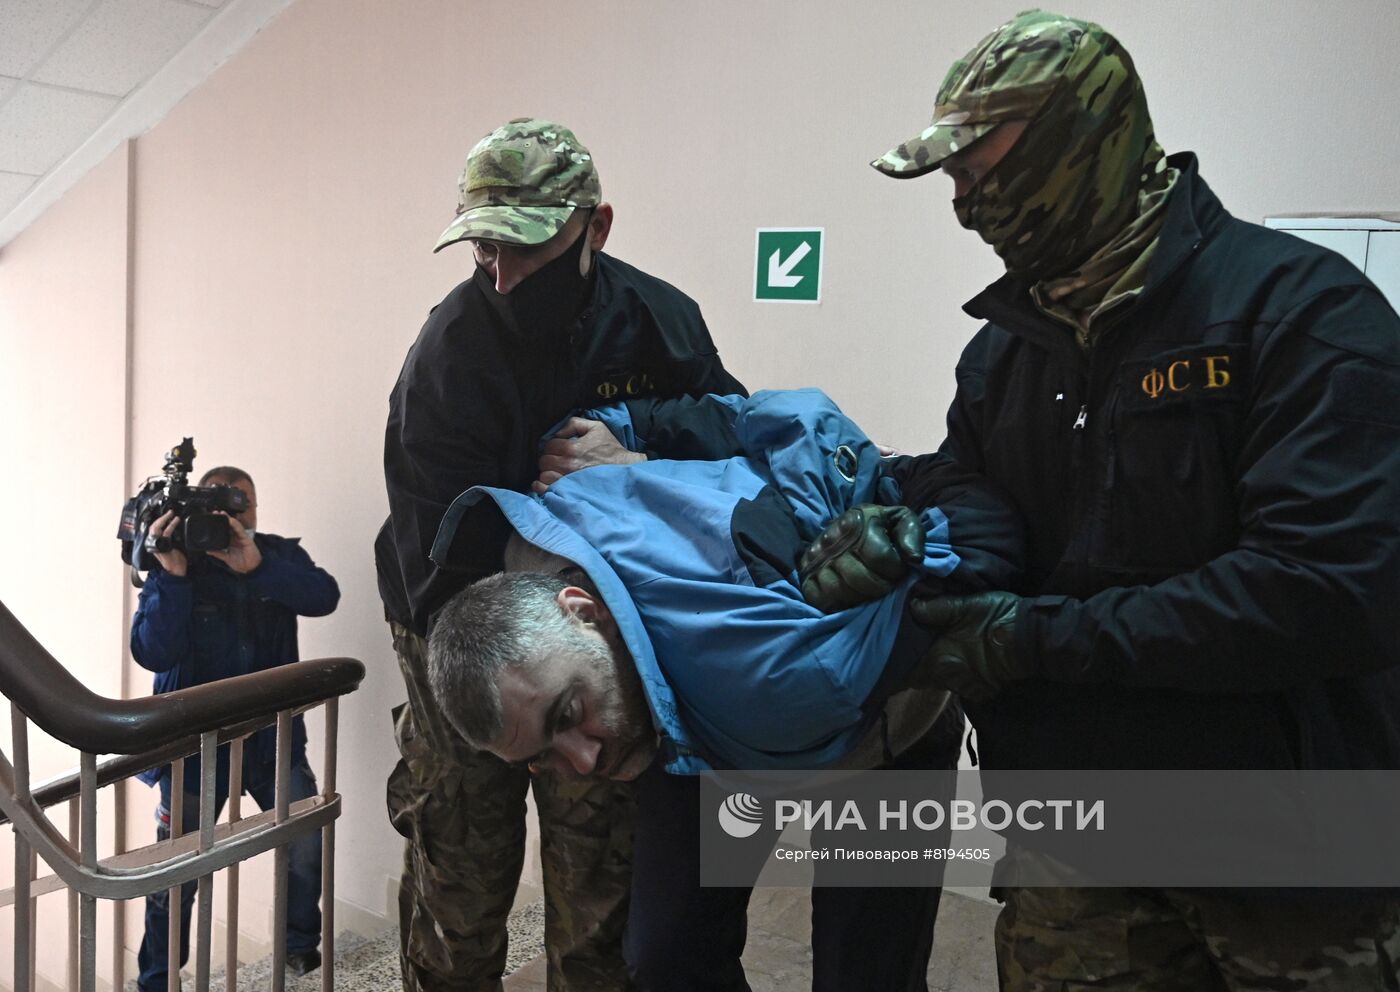 Рассмотрение ходатайства об аресте замкомандира нацбатальона "Айдар" Д. Мурыги